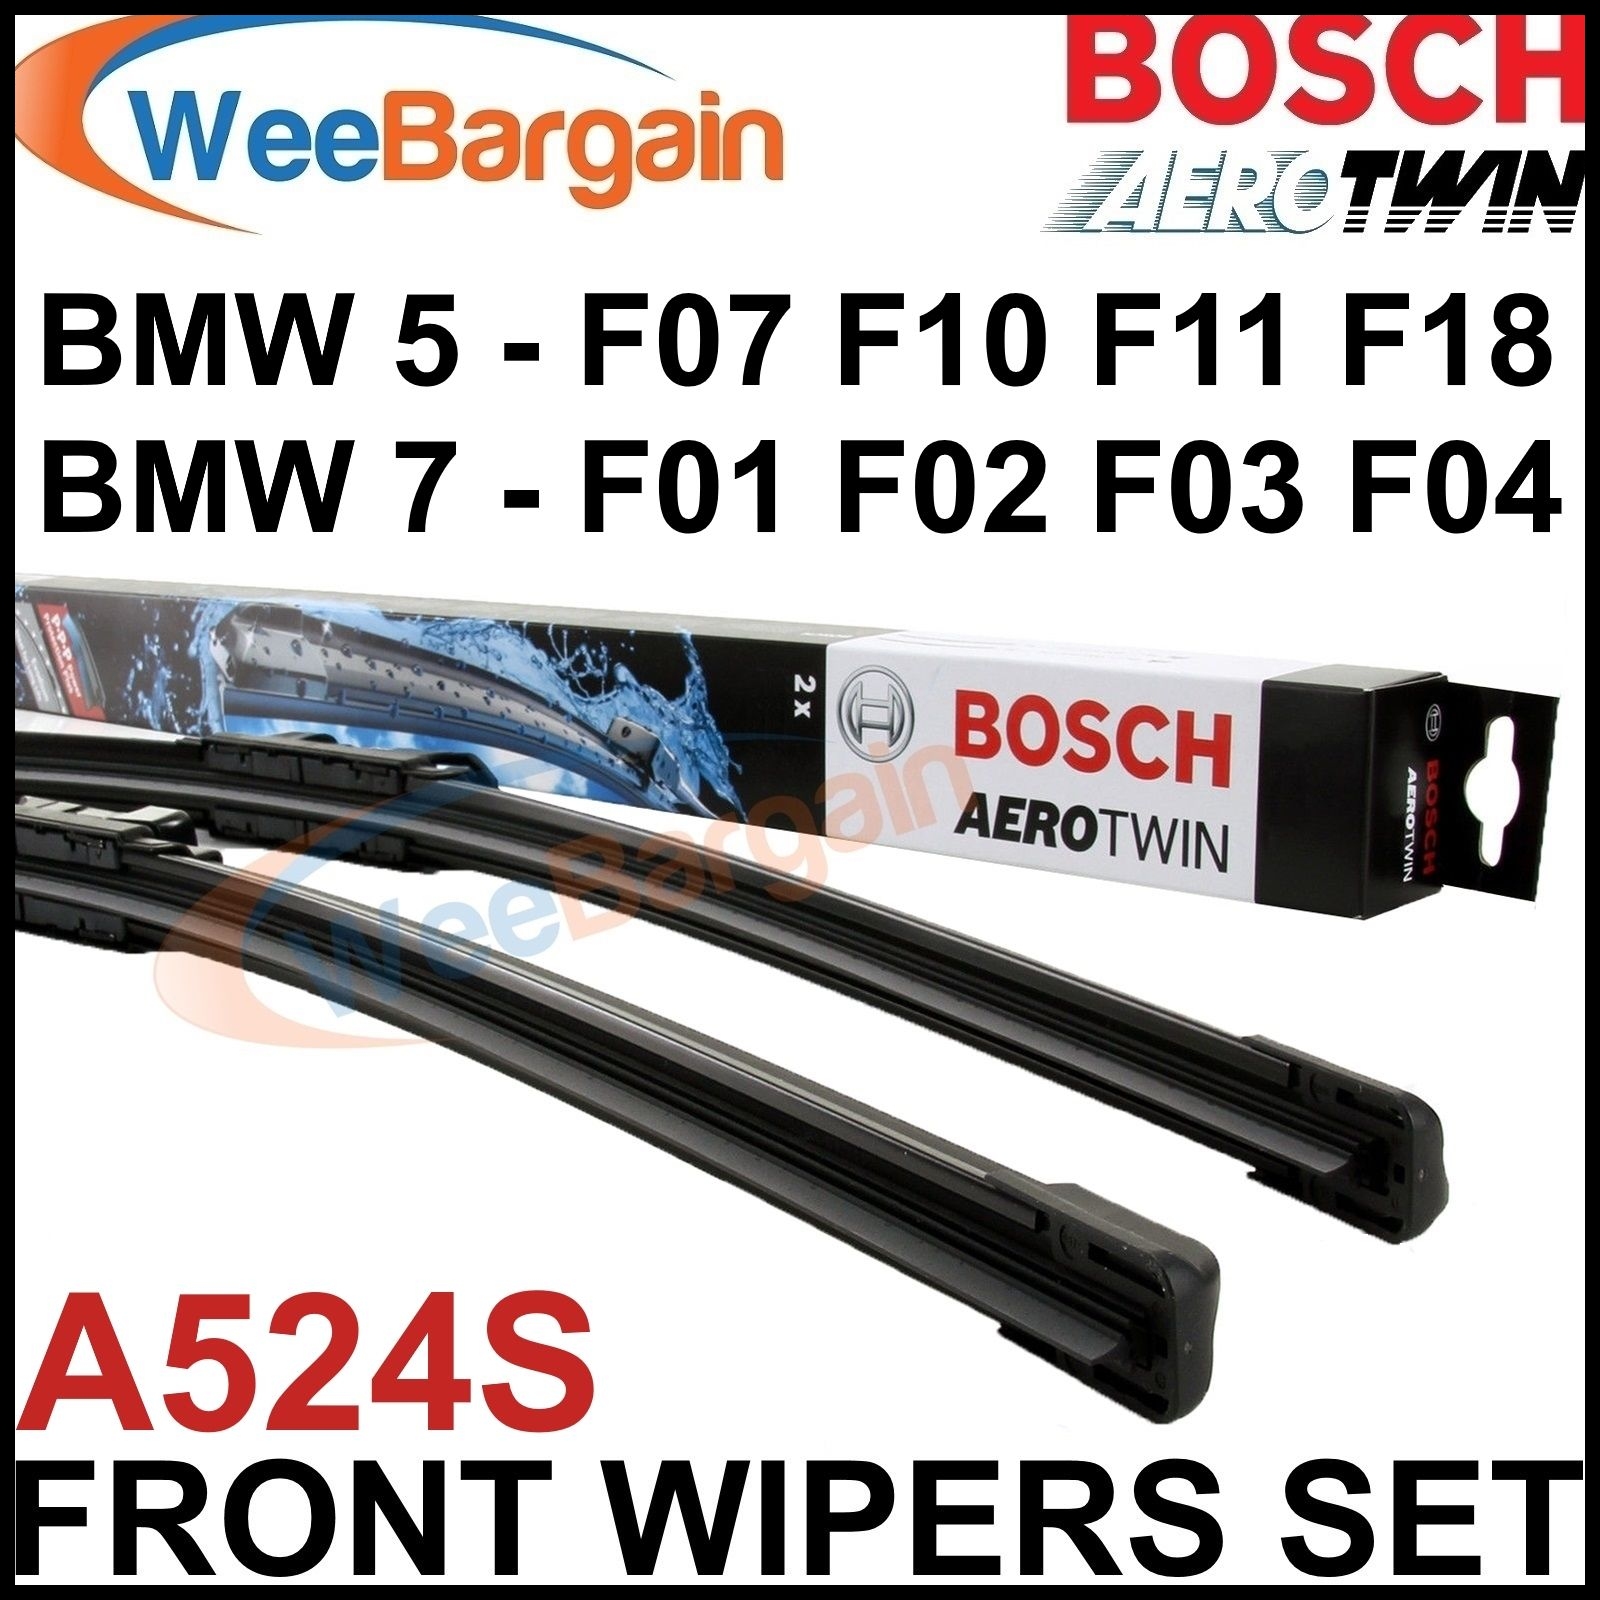 BMW 5 models F07 F10 F11 F18 Genuine BOSCH A524S Aerotwin Front Wiper Blades SetAlso BMW 7 models F01 F02 F03 F04 with MY restrictions